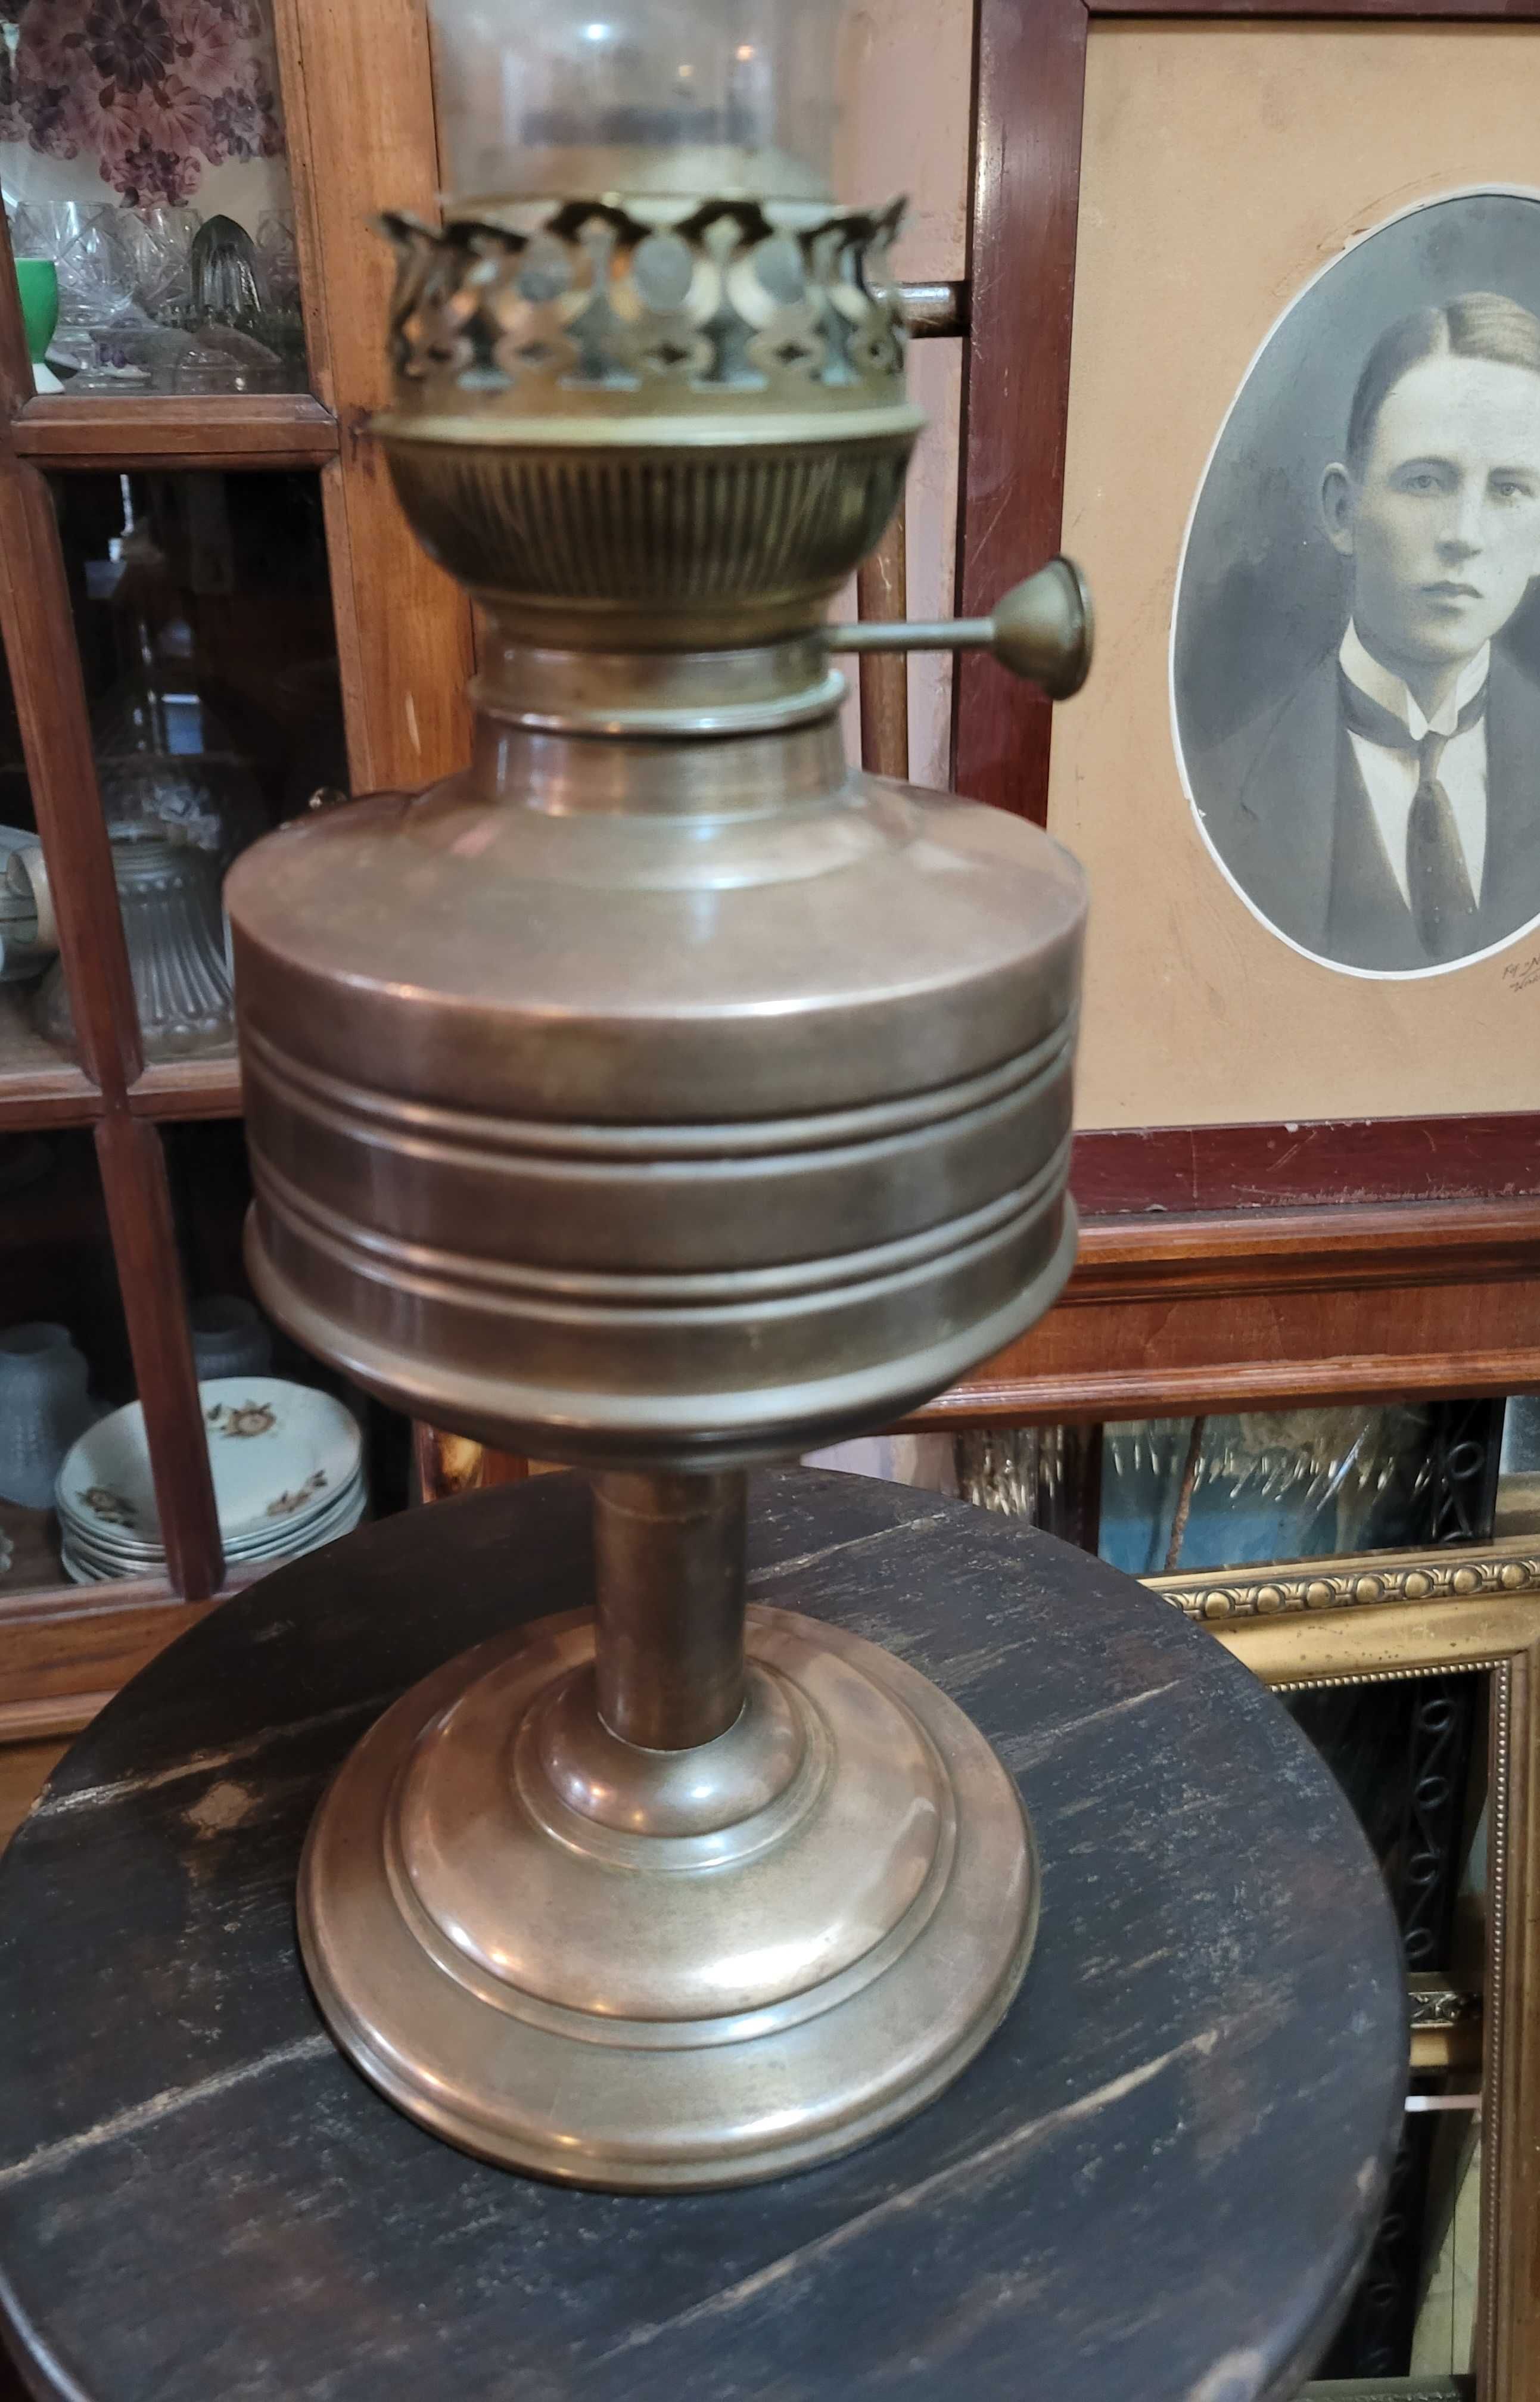 Stara przedwojenna lampa naftowa